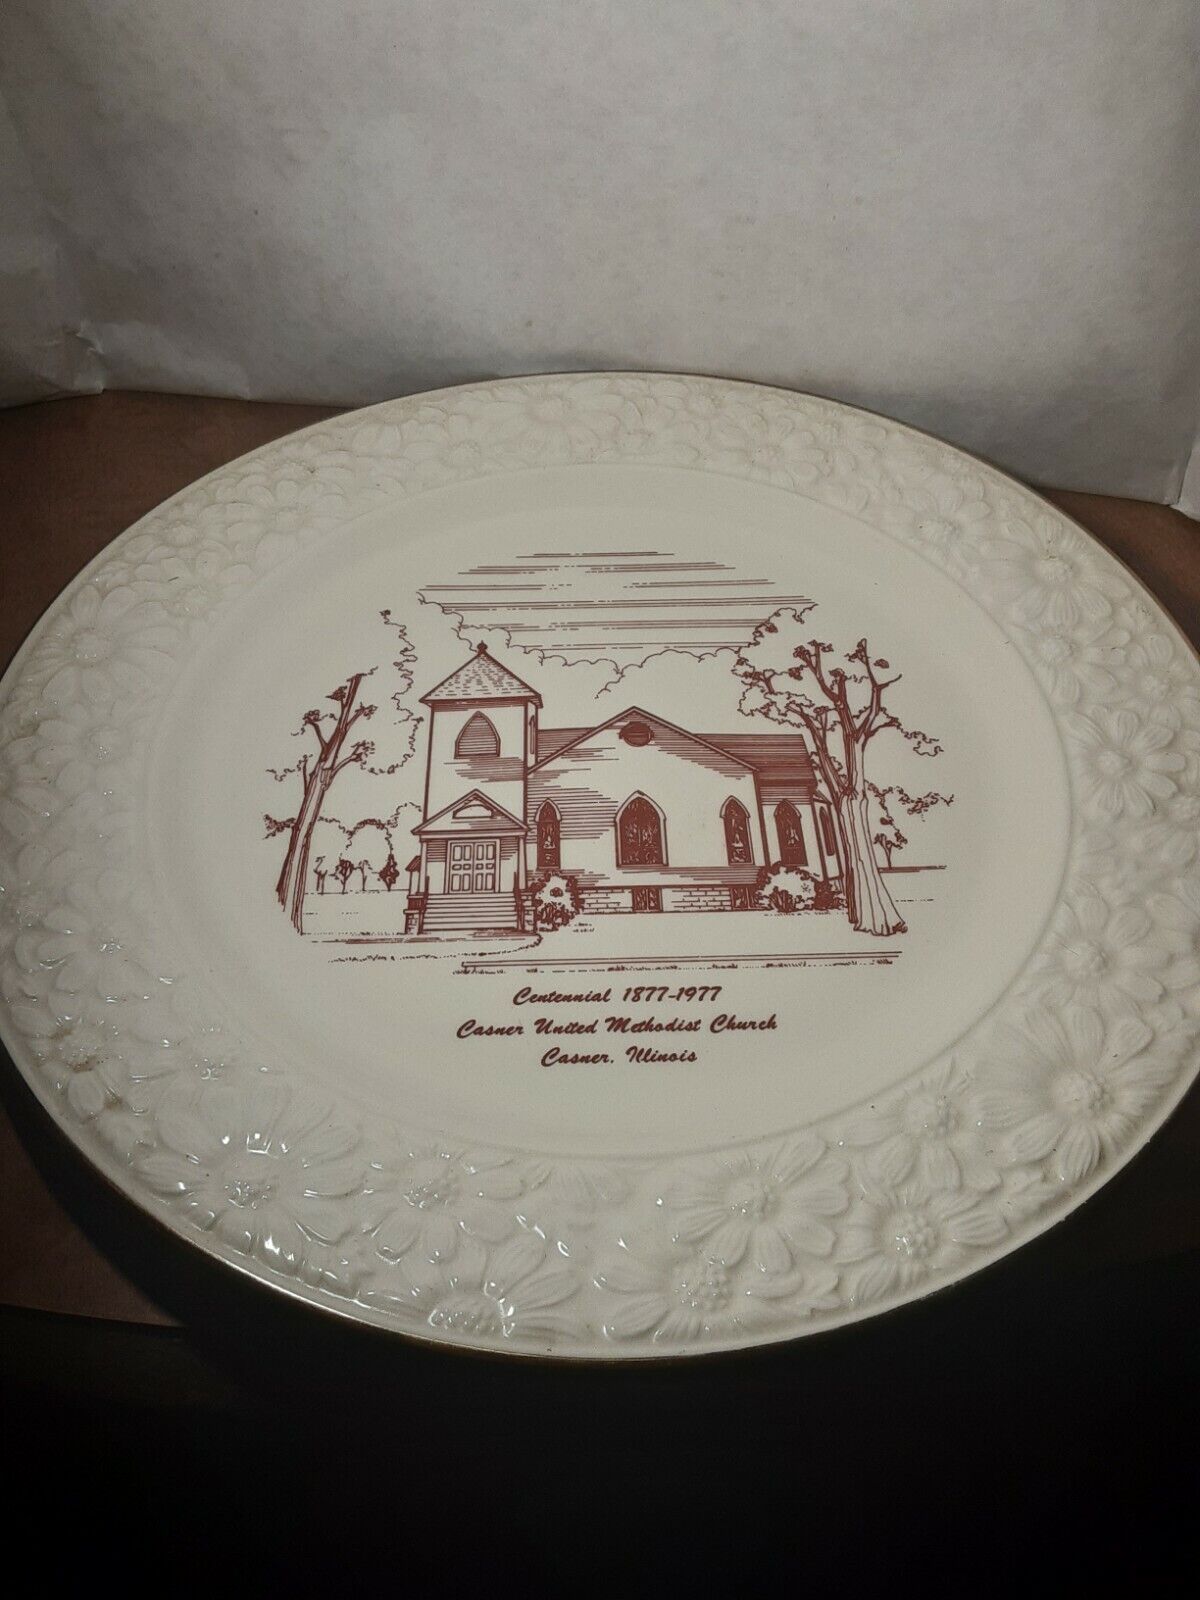 Vintage Casner Illinois Casner United Methodist Church Centennial Plate 